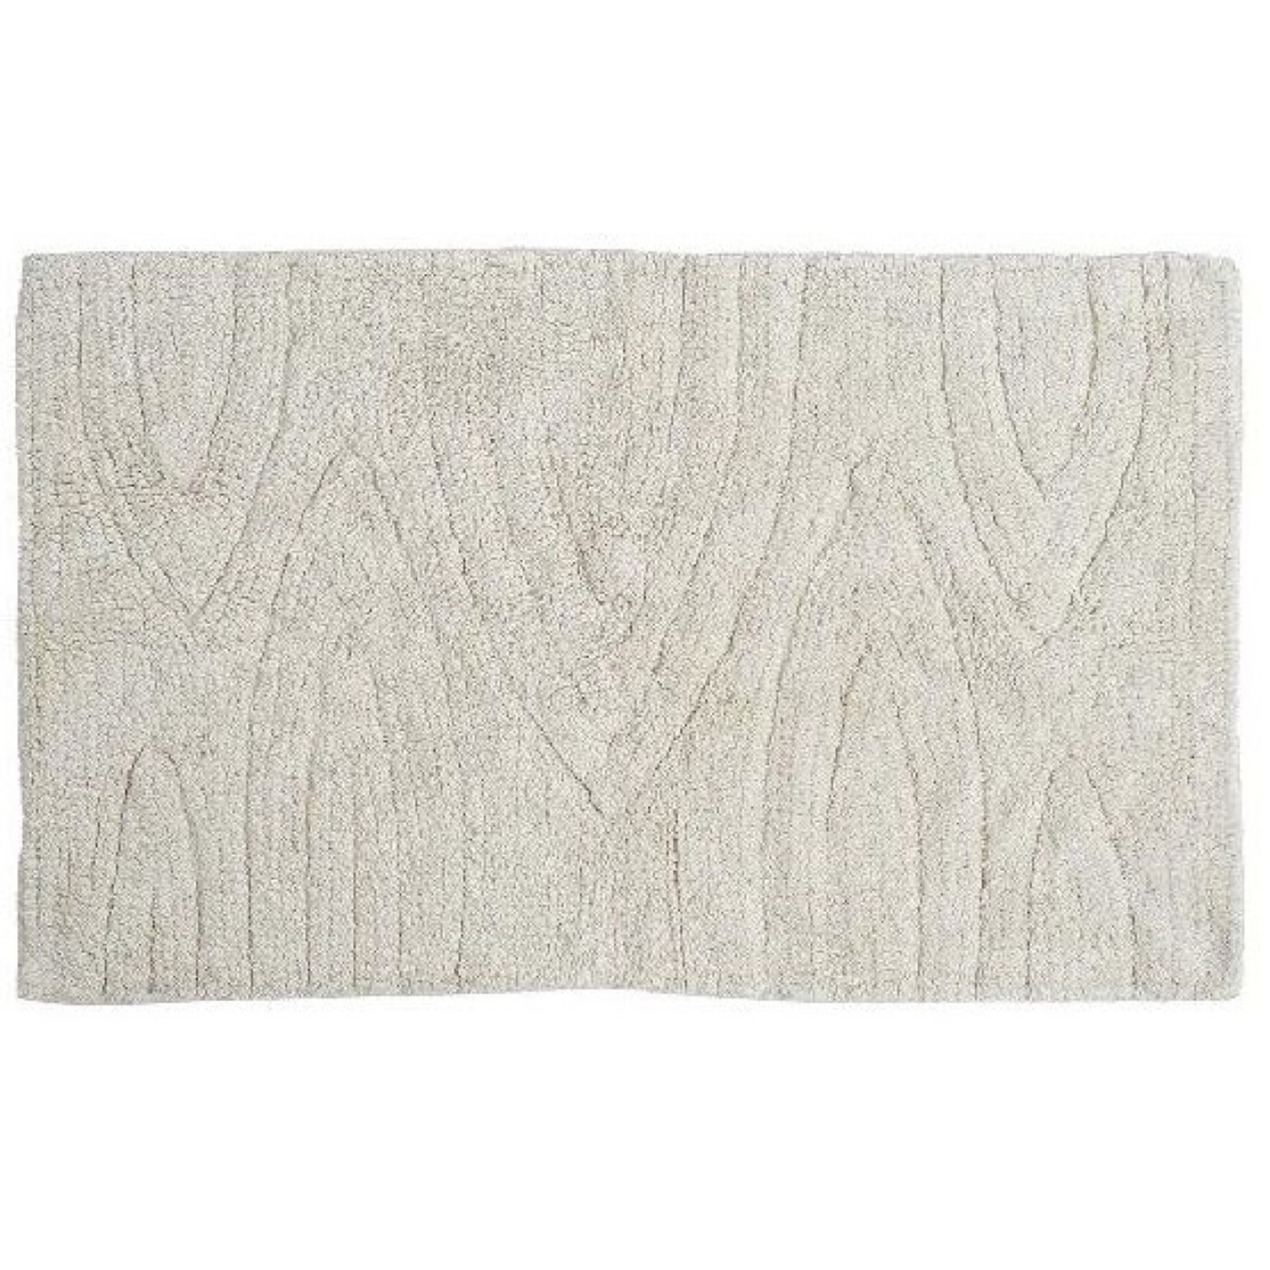 Badmat-badkamerkleed creme wit 80 x 50 cm rechthoekig